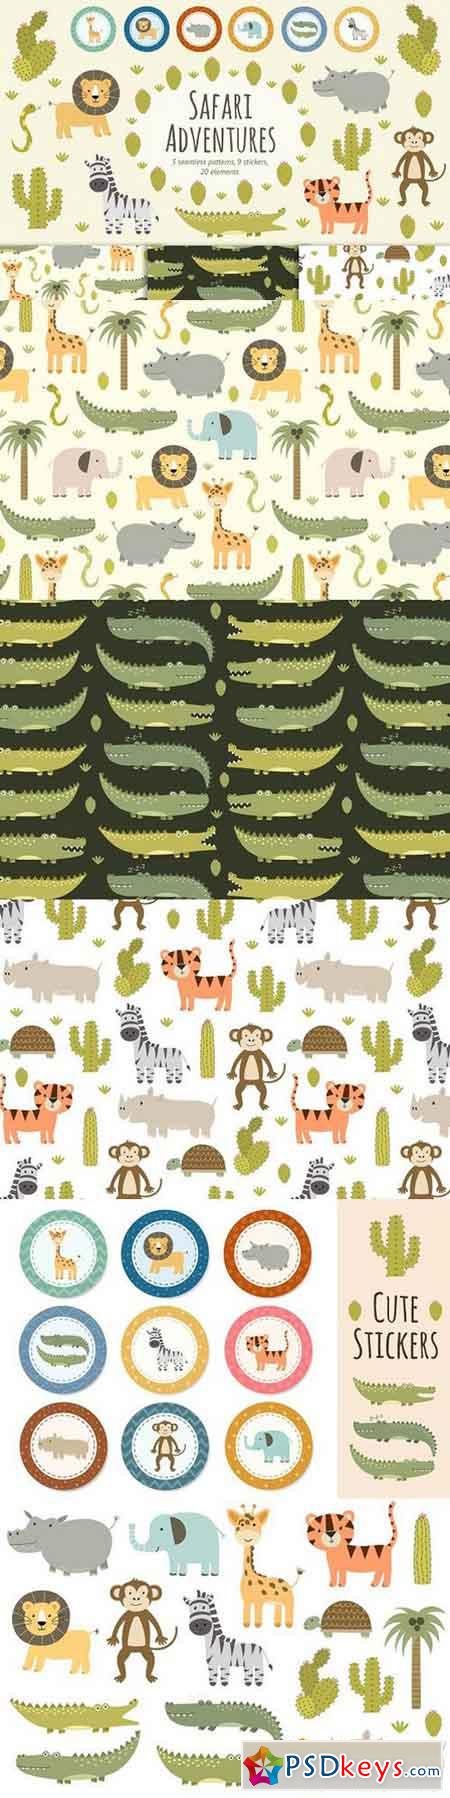 Safari animals patterns & stickers 845529